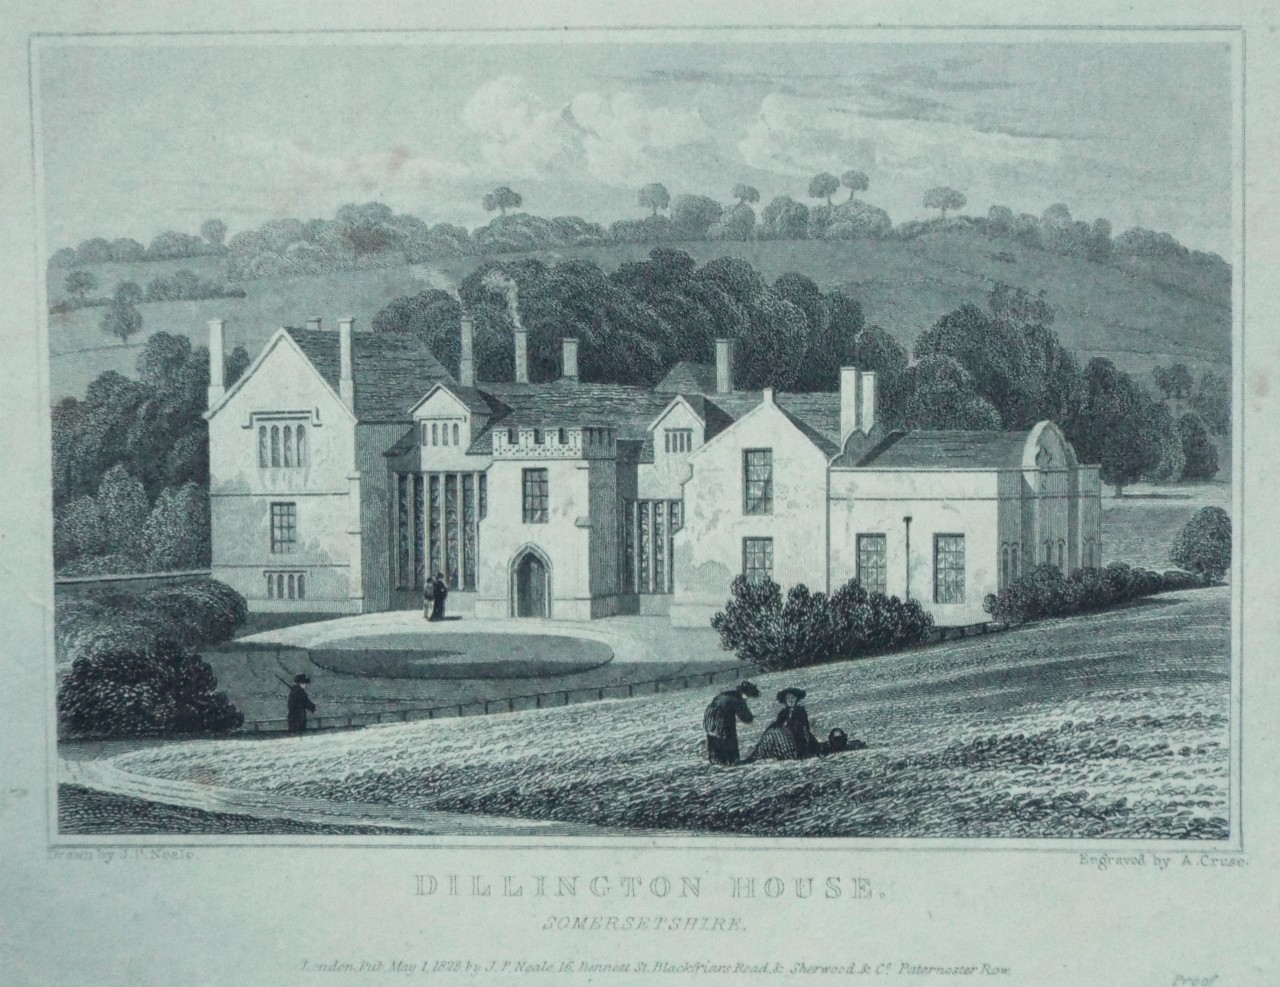 Print - Dillington House, Somersetshire. - Watkins